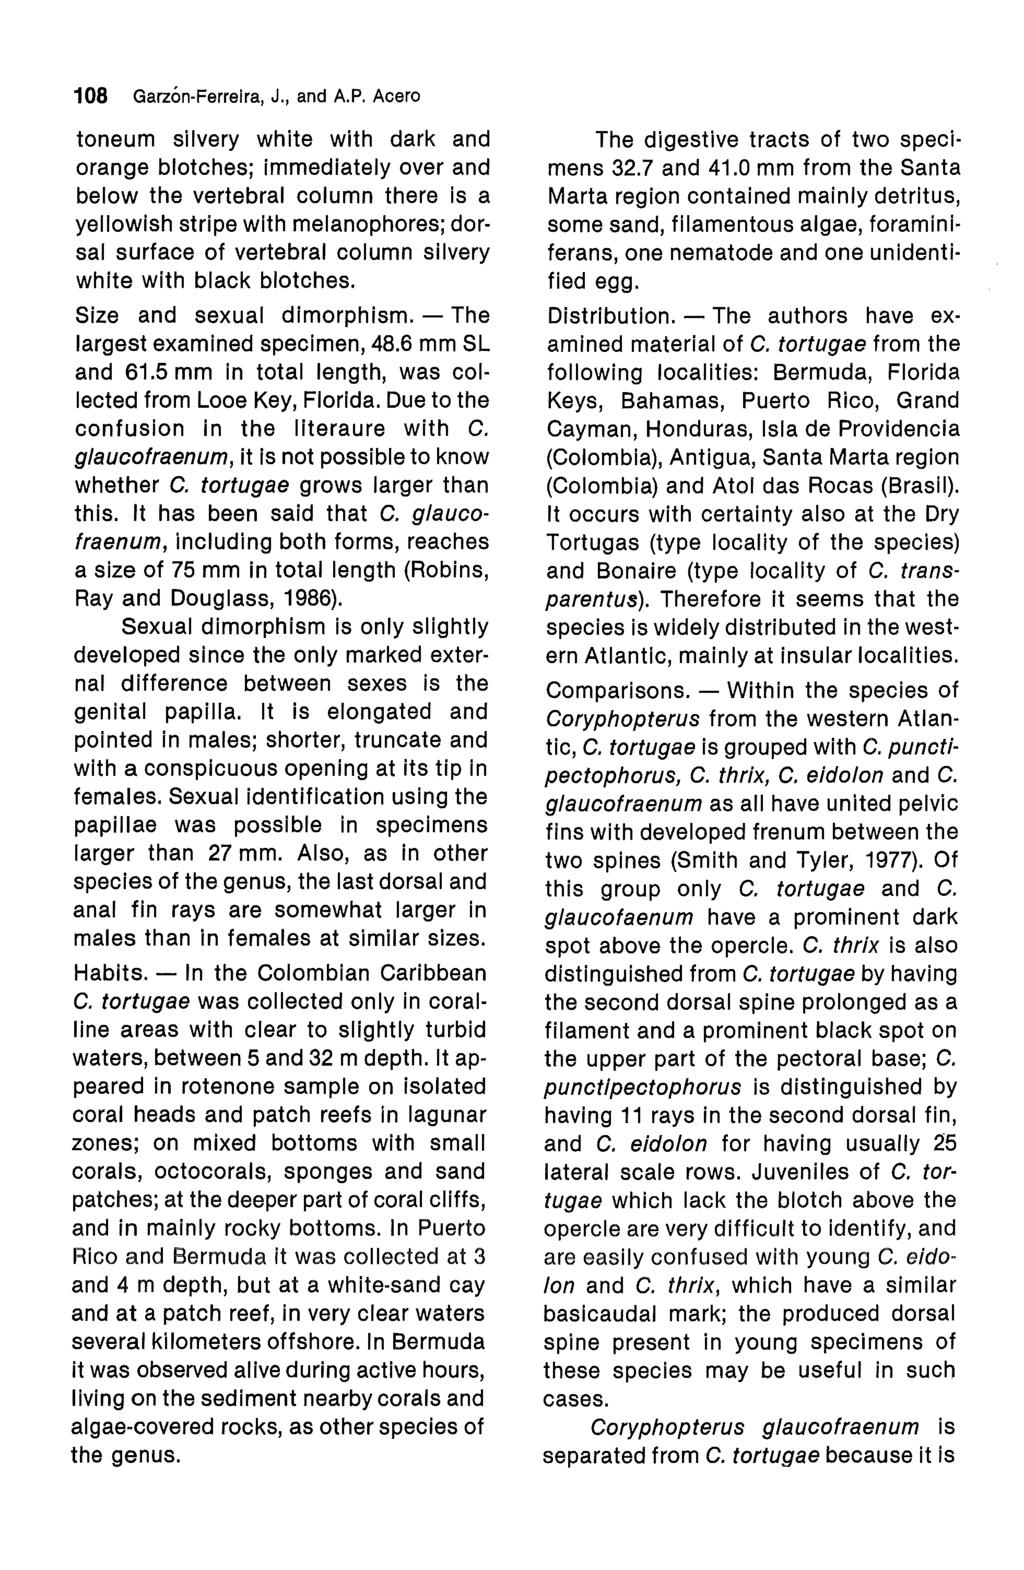 108 Garz6n-Ferreira, J., and A.P. Acero Gulf of Mexico Science, Vol. 11 [1990], No. 2, Art.